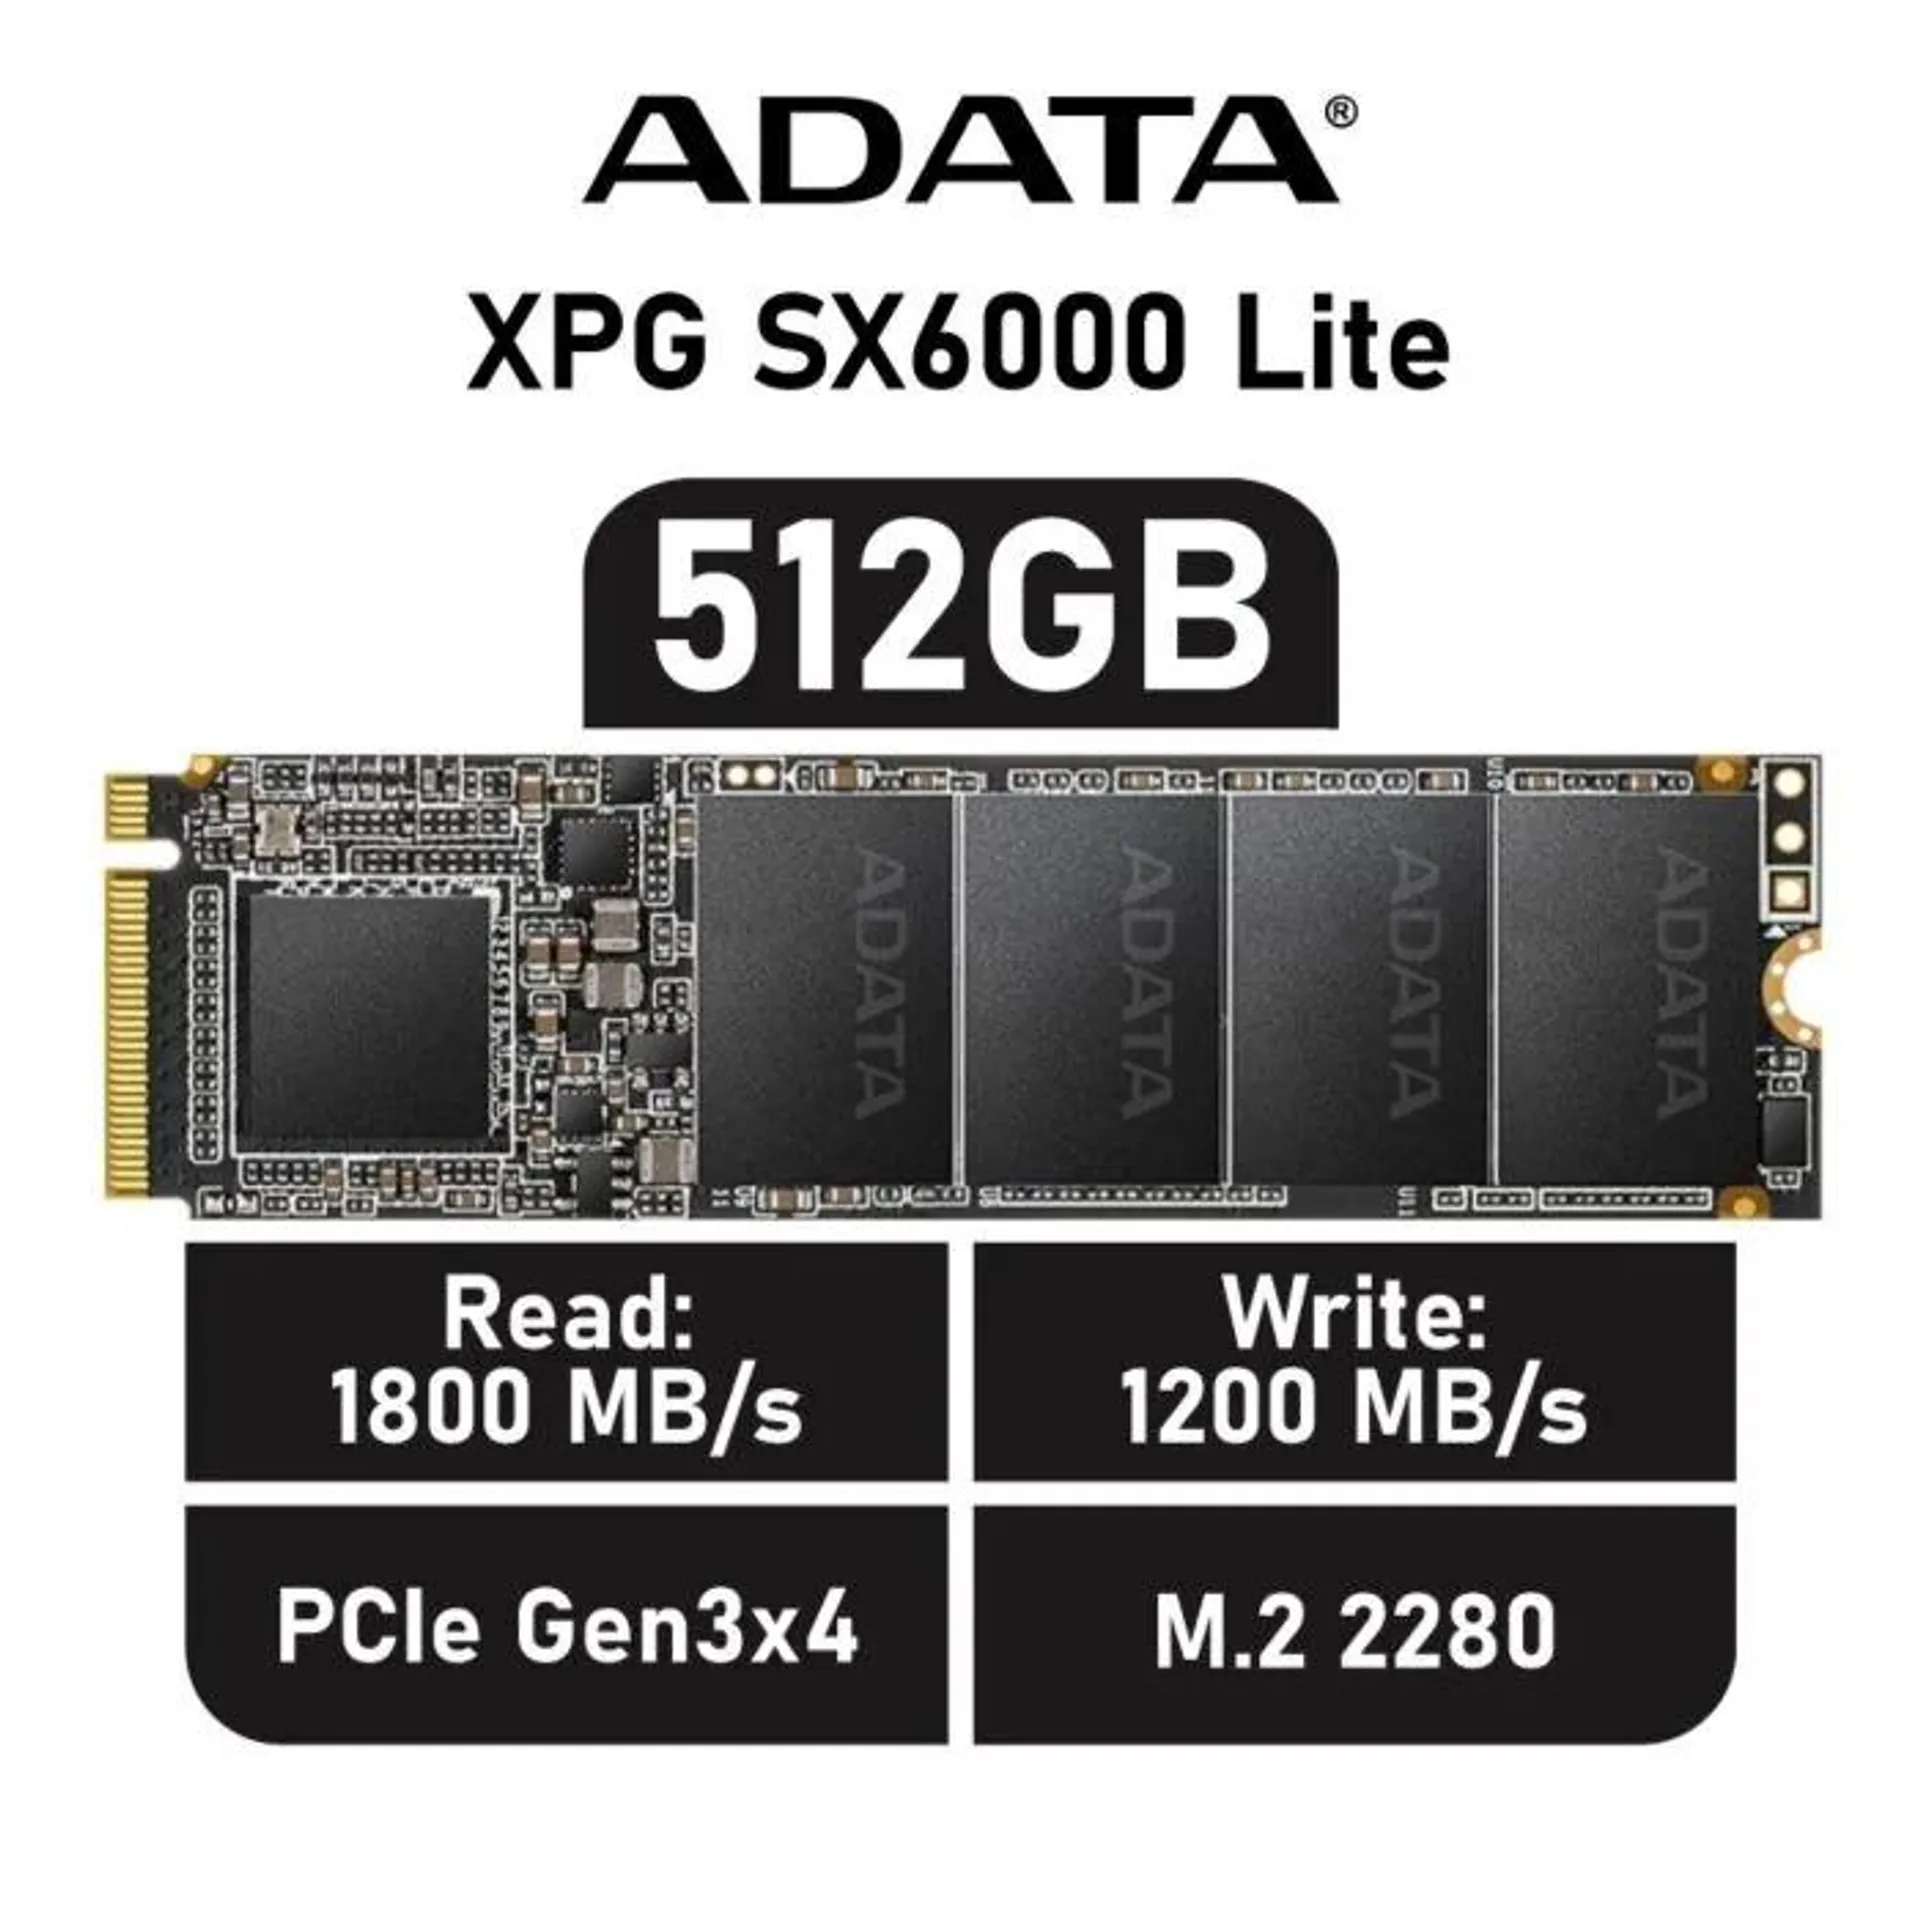 ADATA XPG SX6000 Lite 512GB PCIe Gen3x4 ASX6000LNP-512GT-C M.2 2280 Solid State Drive